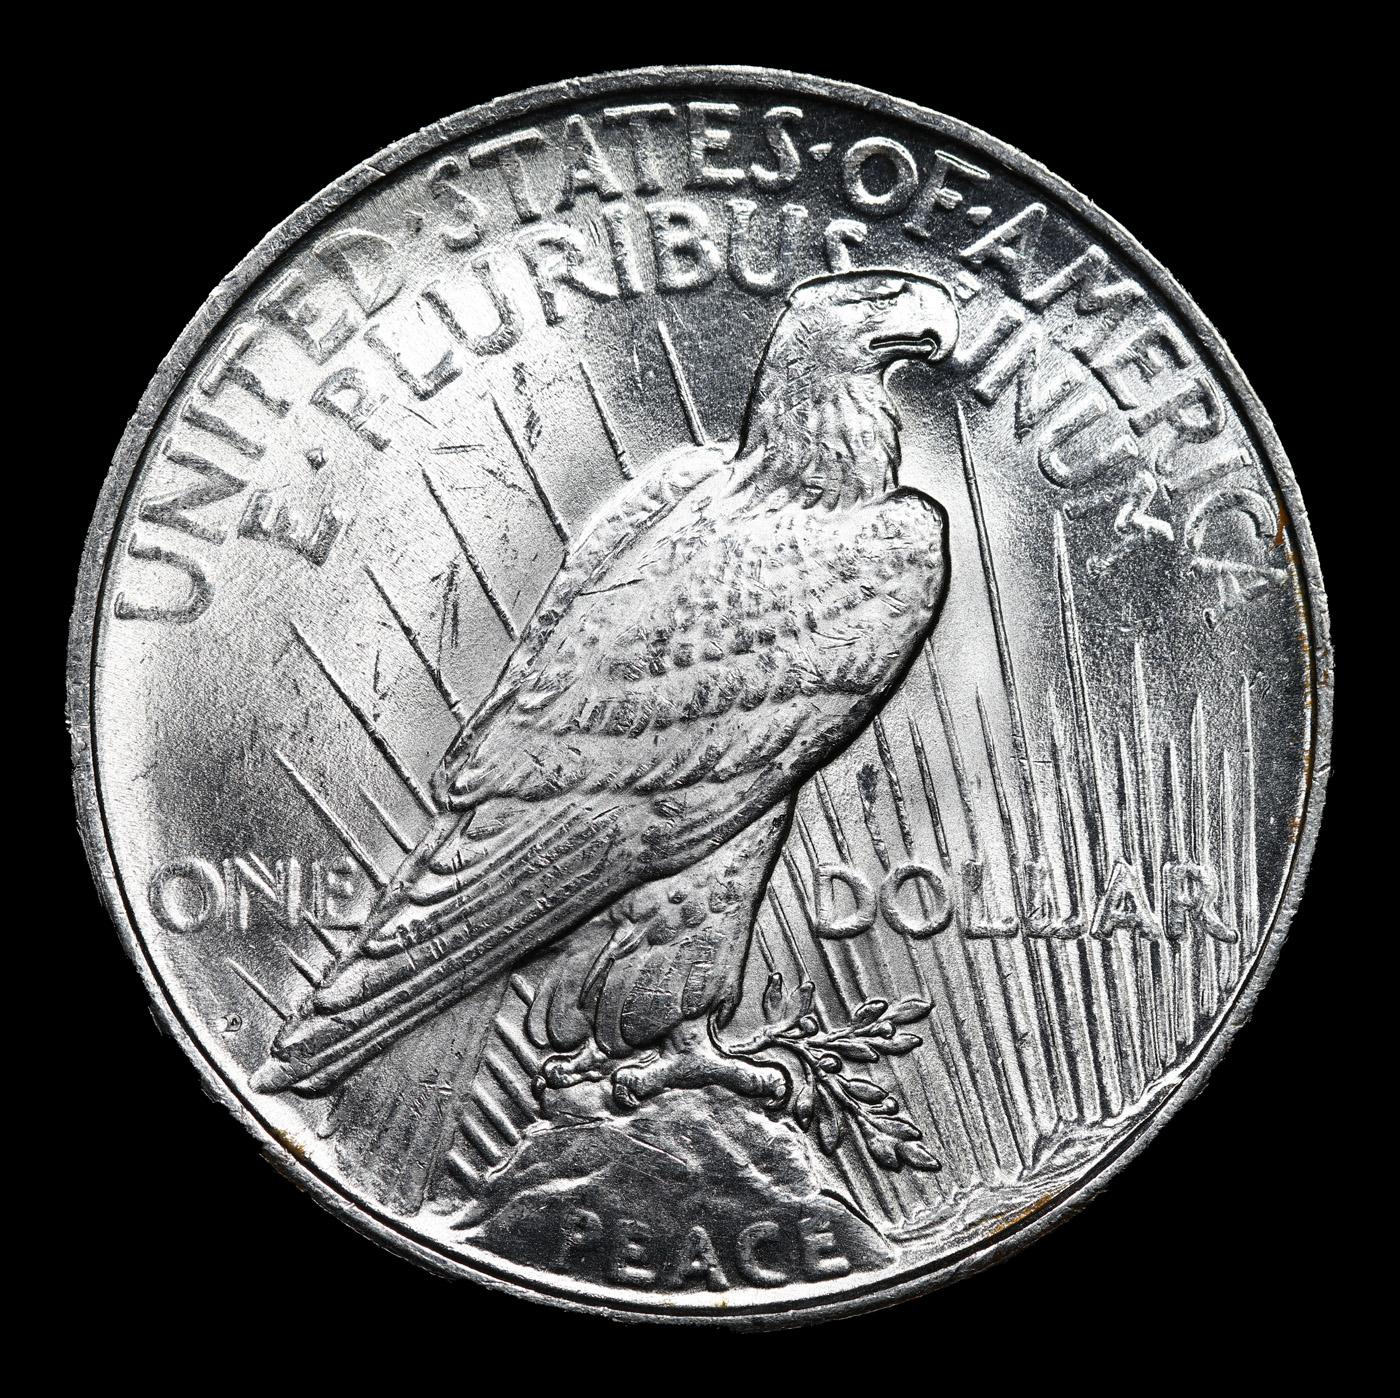 1922-d Peace Dollar $1 Grades Choice+ Unc